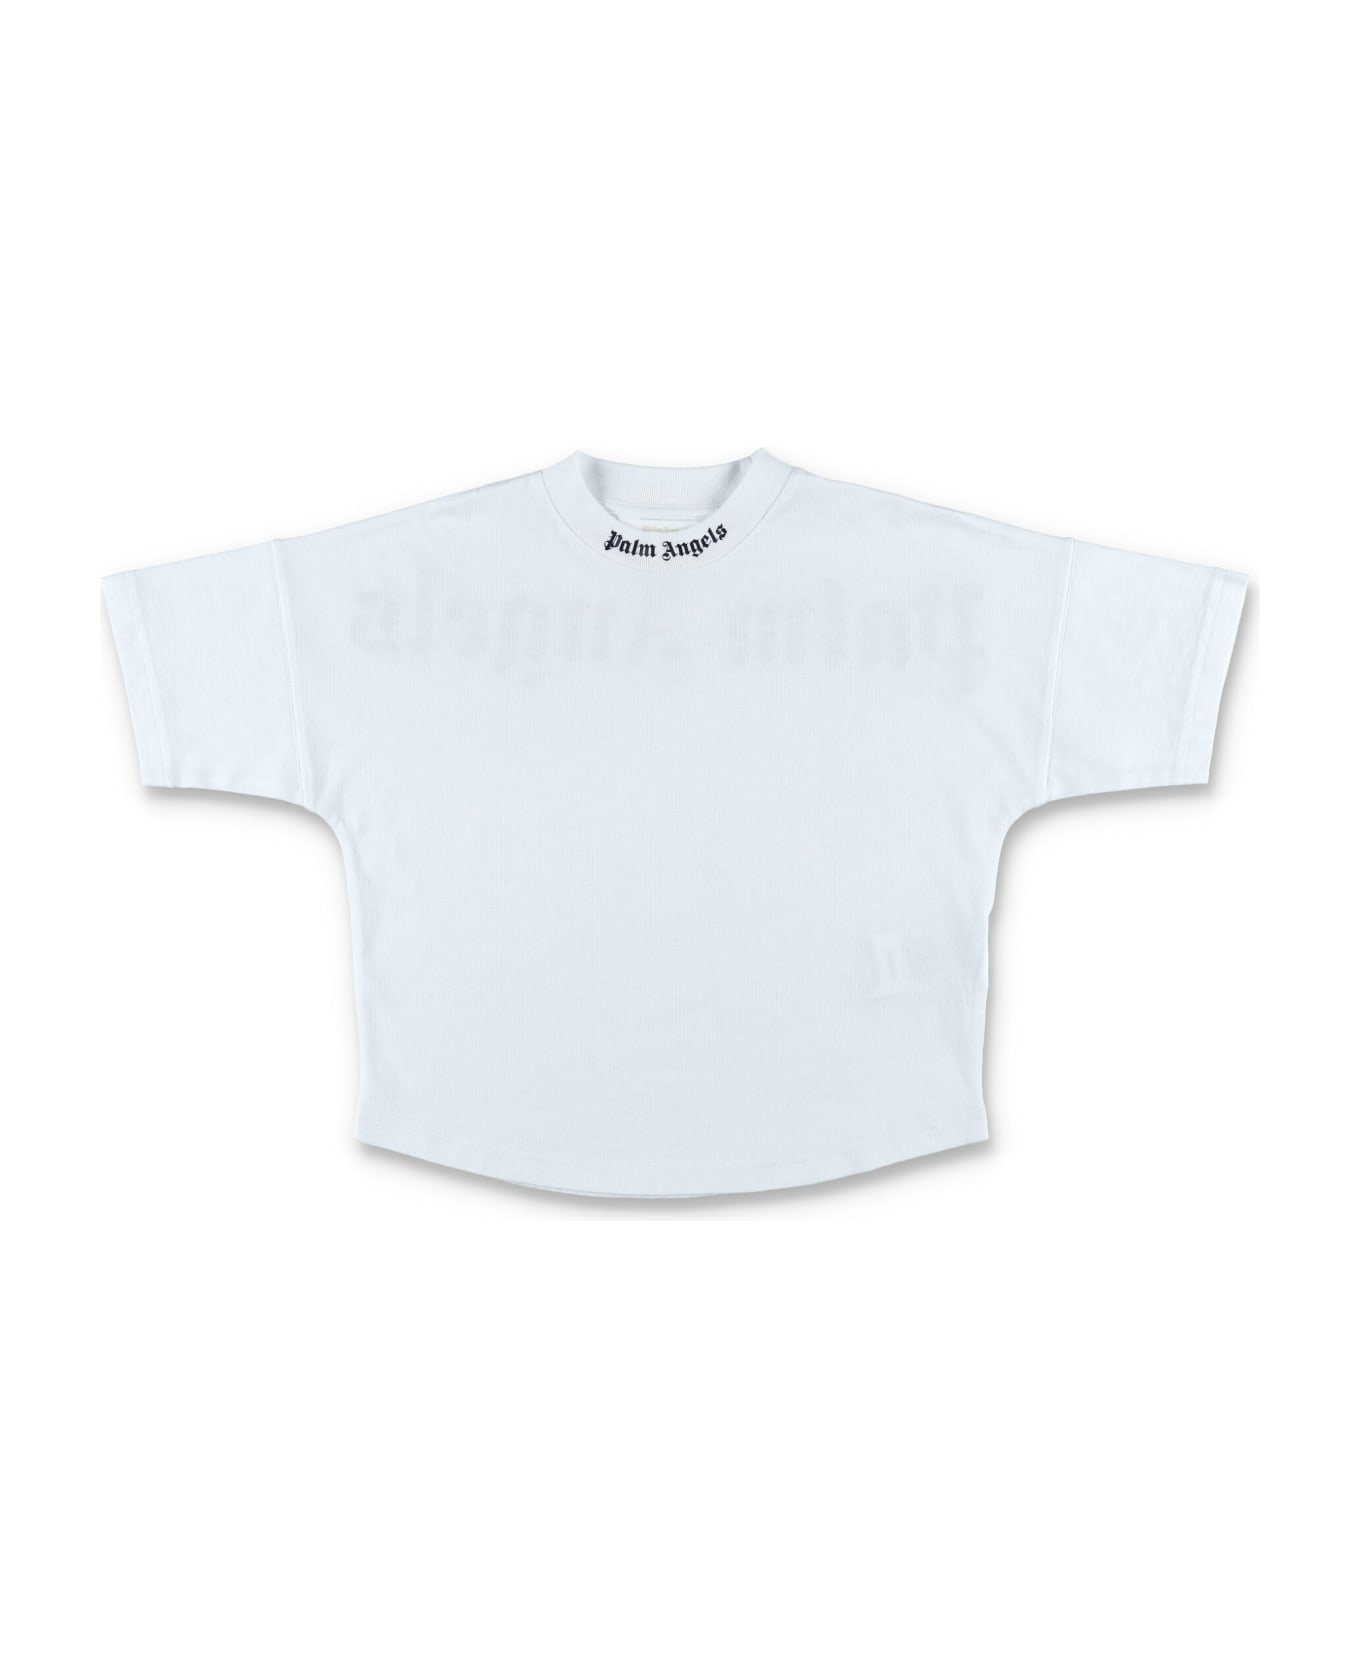 Palm Angels Classic Overlogo T-shirt - White/navy